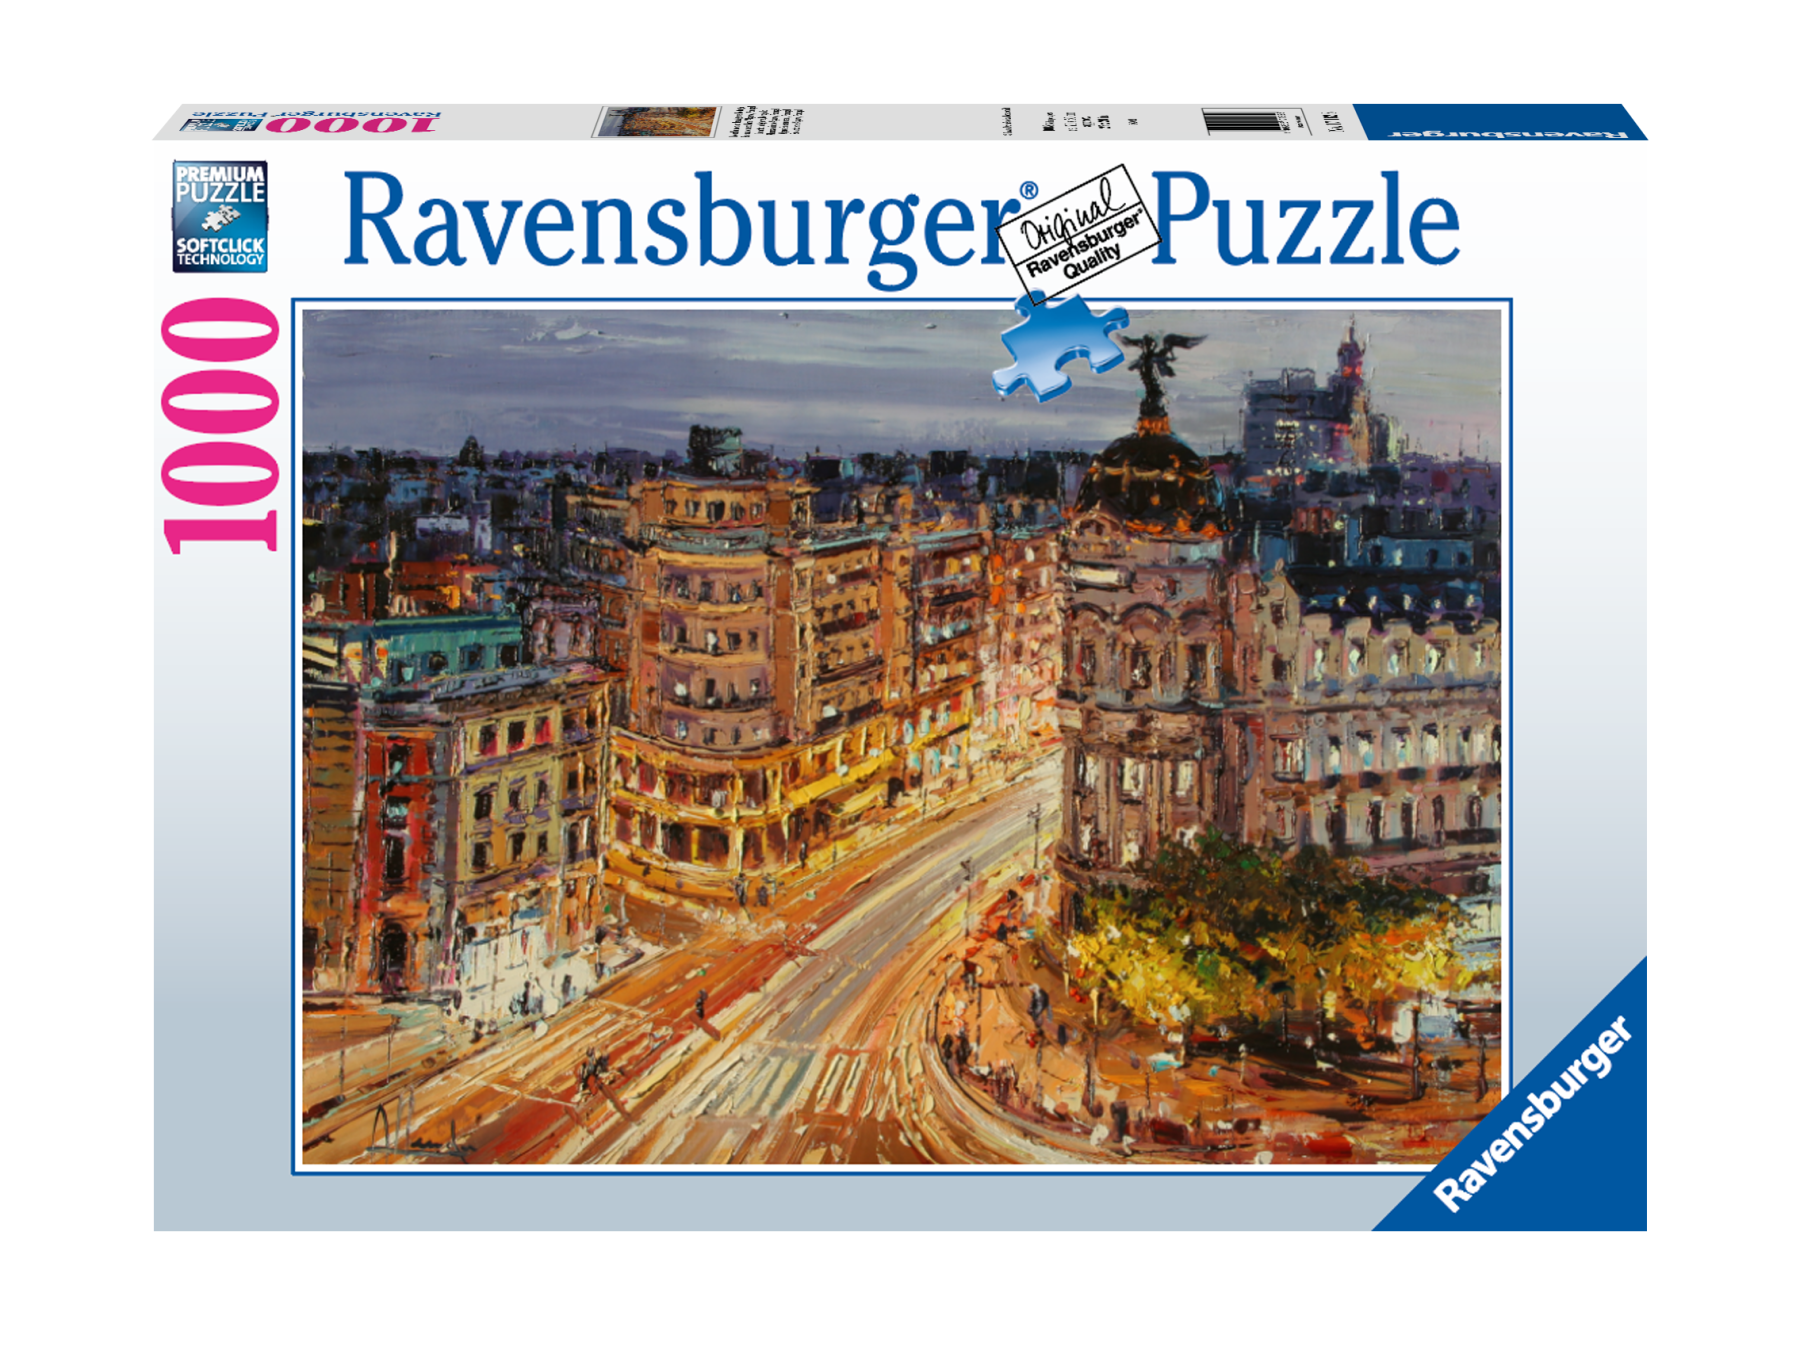 Ravensburger - puzzle dipinto di madrid, la gran via, 1000 pezzi, puzzle adulti - RAVENSBURGER